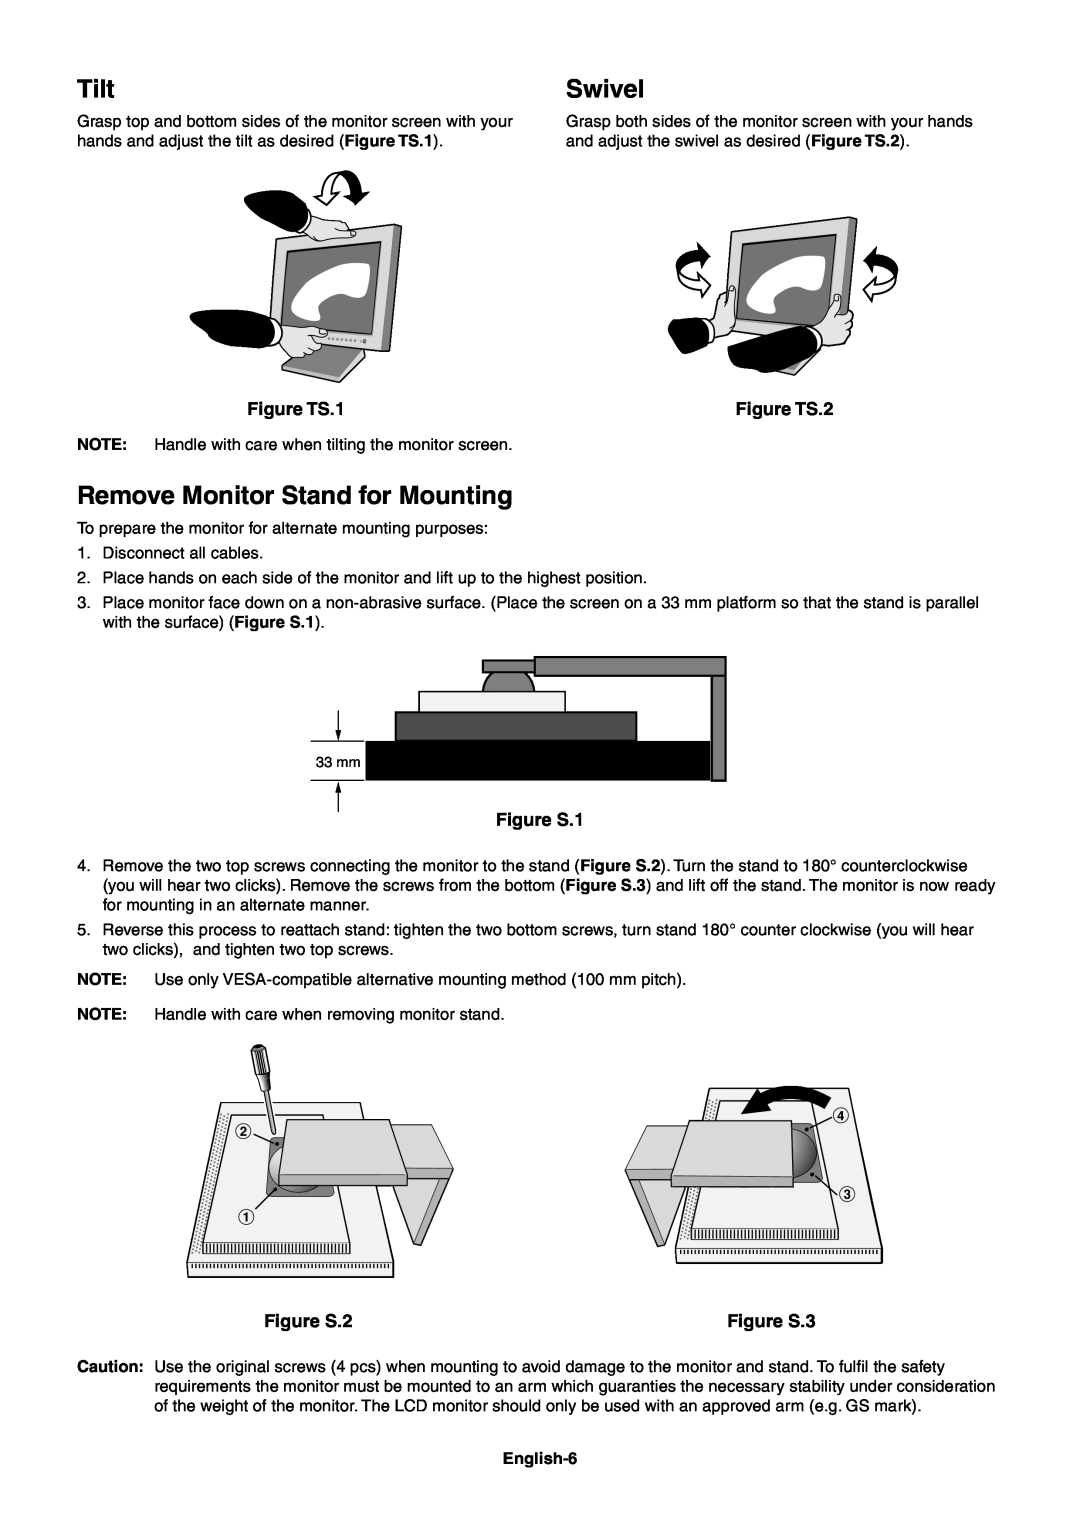 NEC LCD1980SX Tilt, Swivel, Remove Monitor Stand for Mounting, Figure TS.1, Figure S.1, Figure S.2, Figure S.3, English-6 